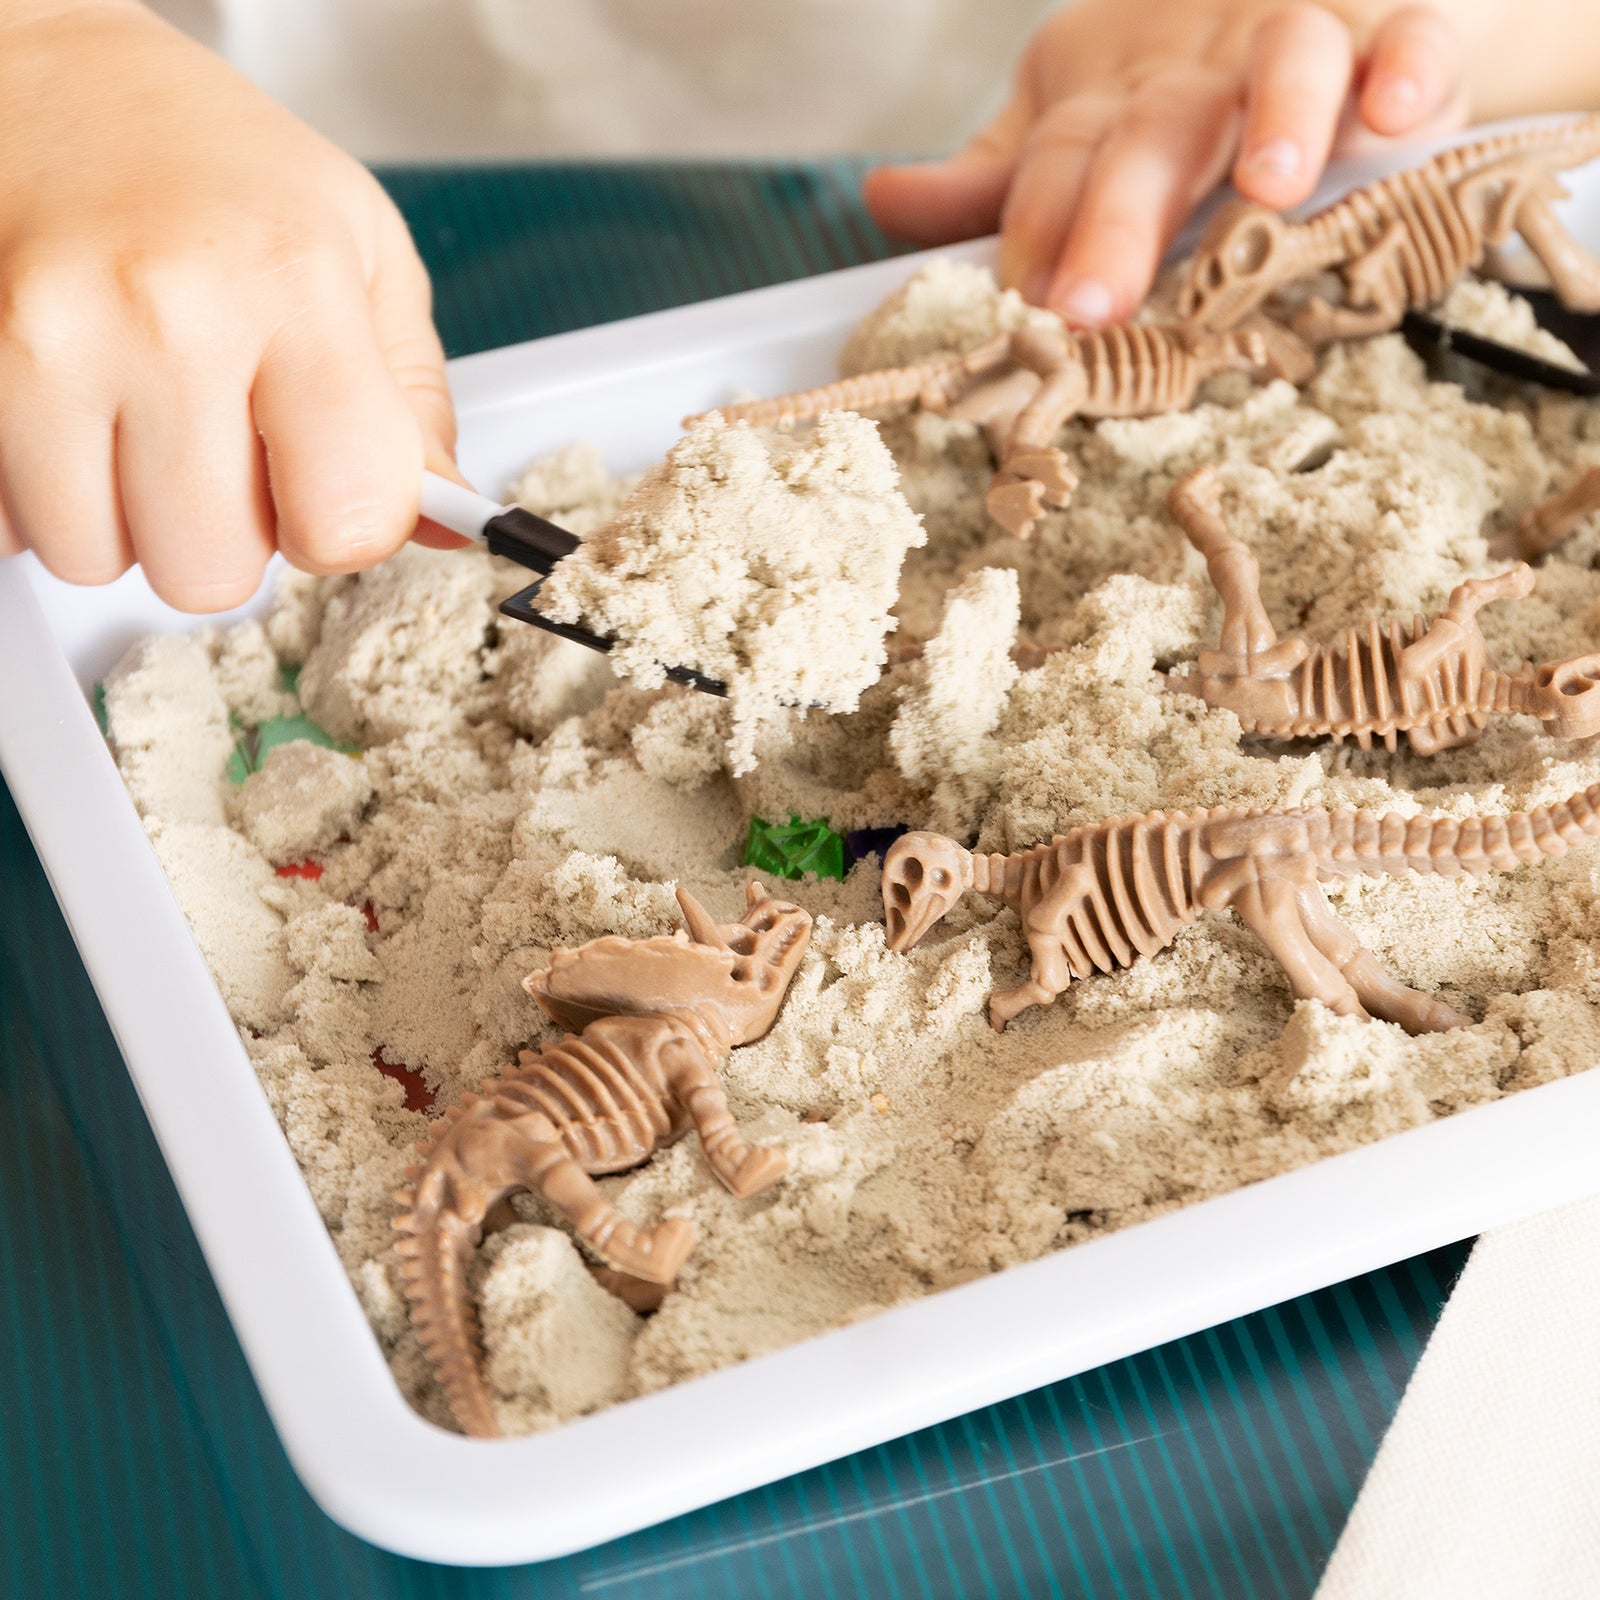 Dinosaur Sensory Bin, Dinosaur Toy for Preschoolers